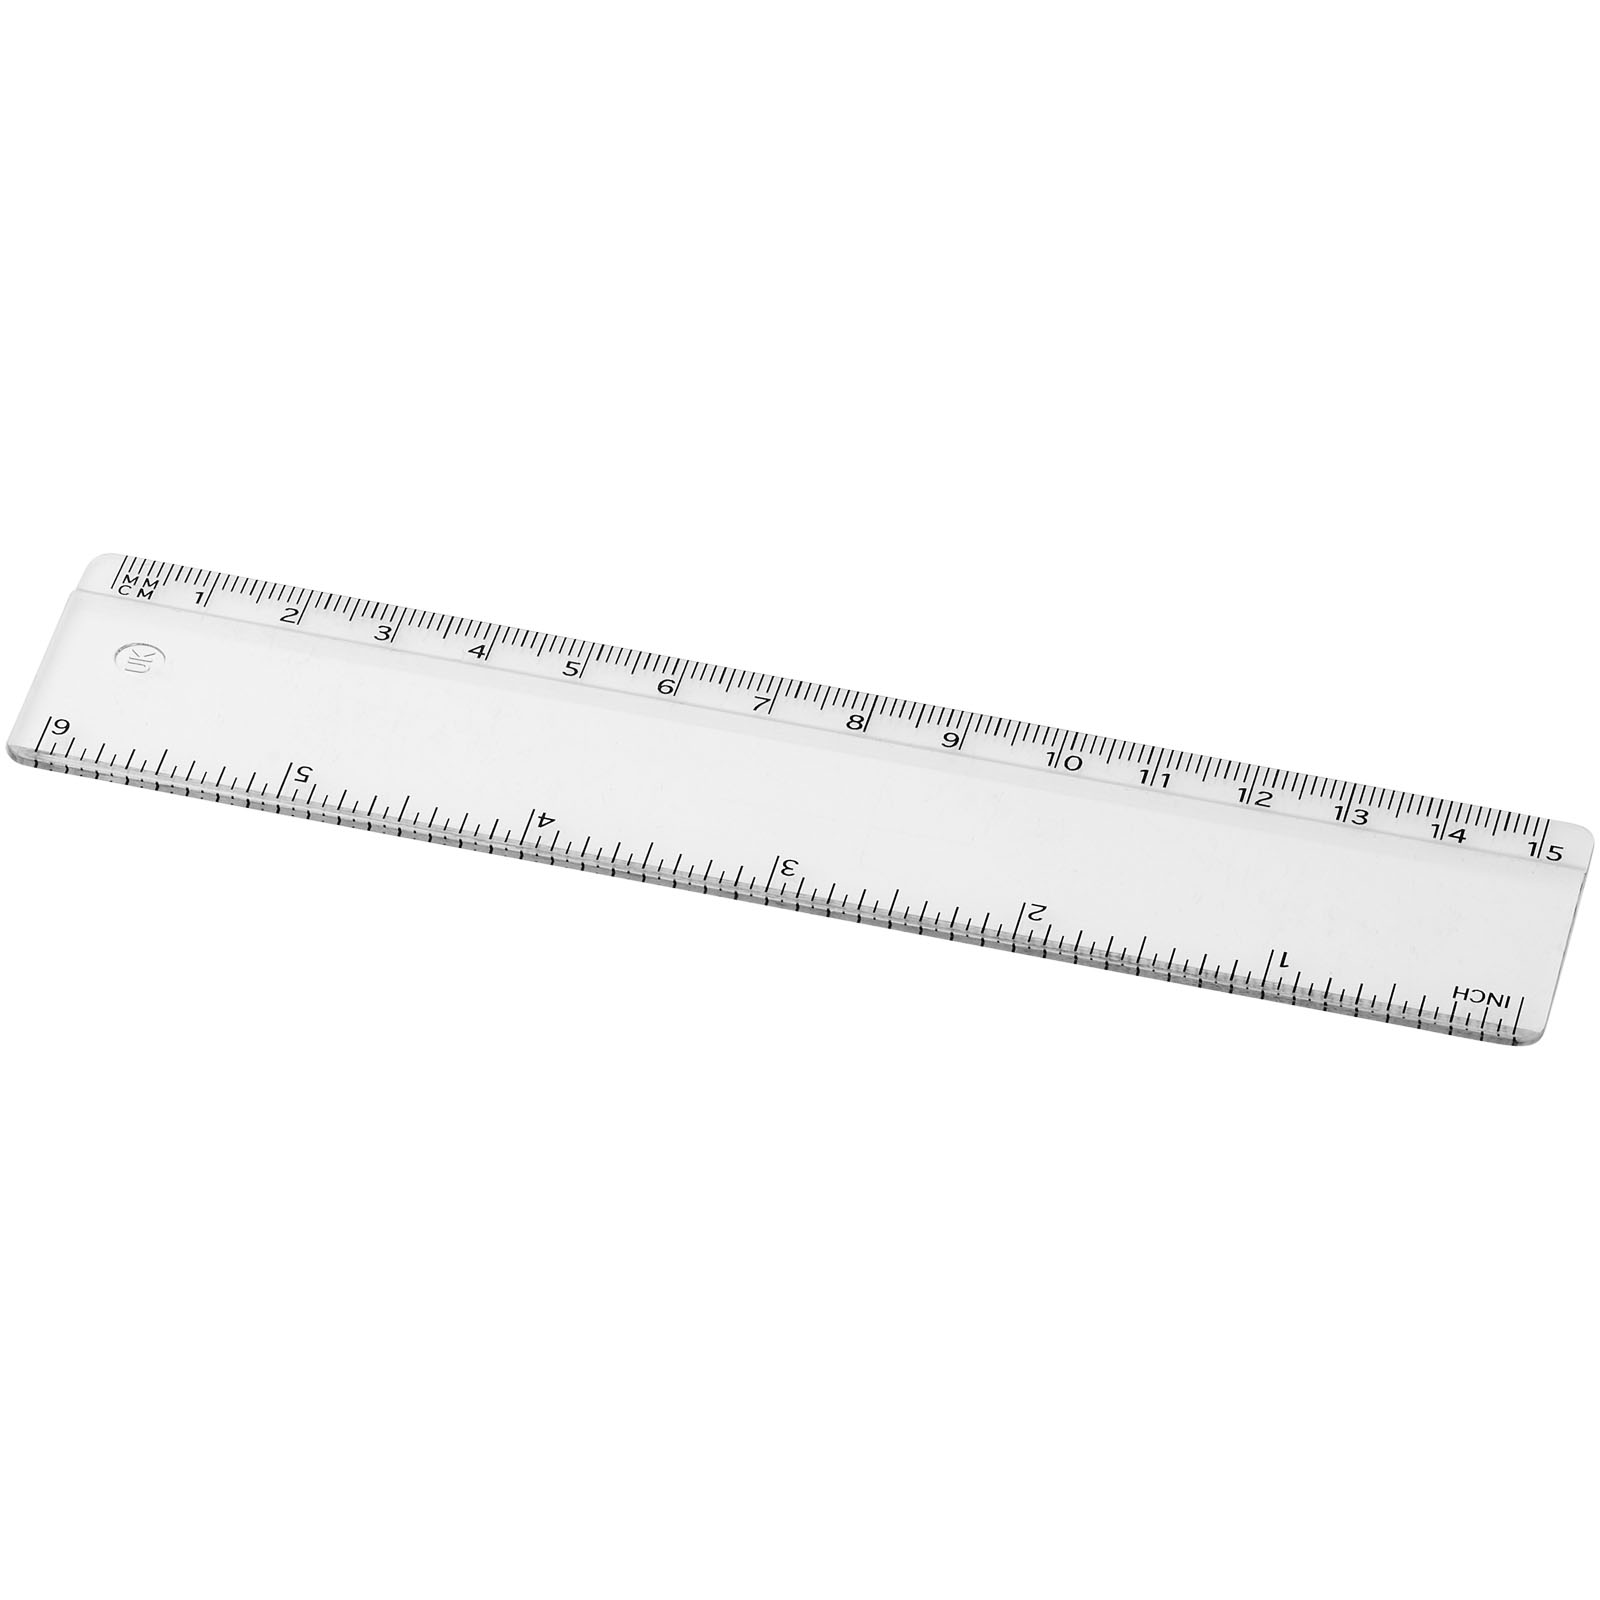 Desk Accessories - Renzo 15 cm plastic ruler